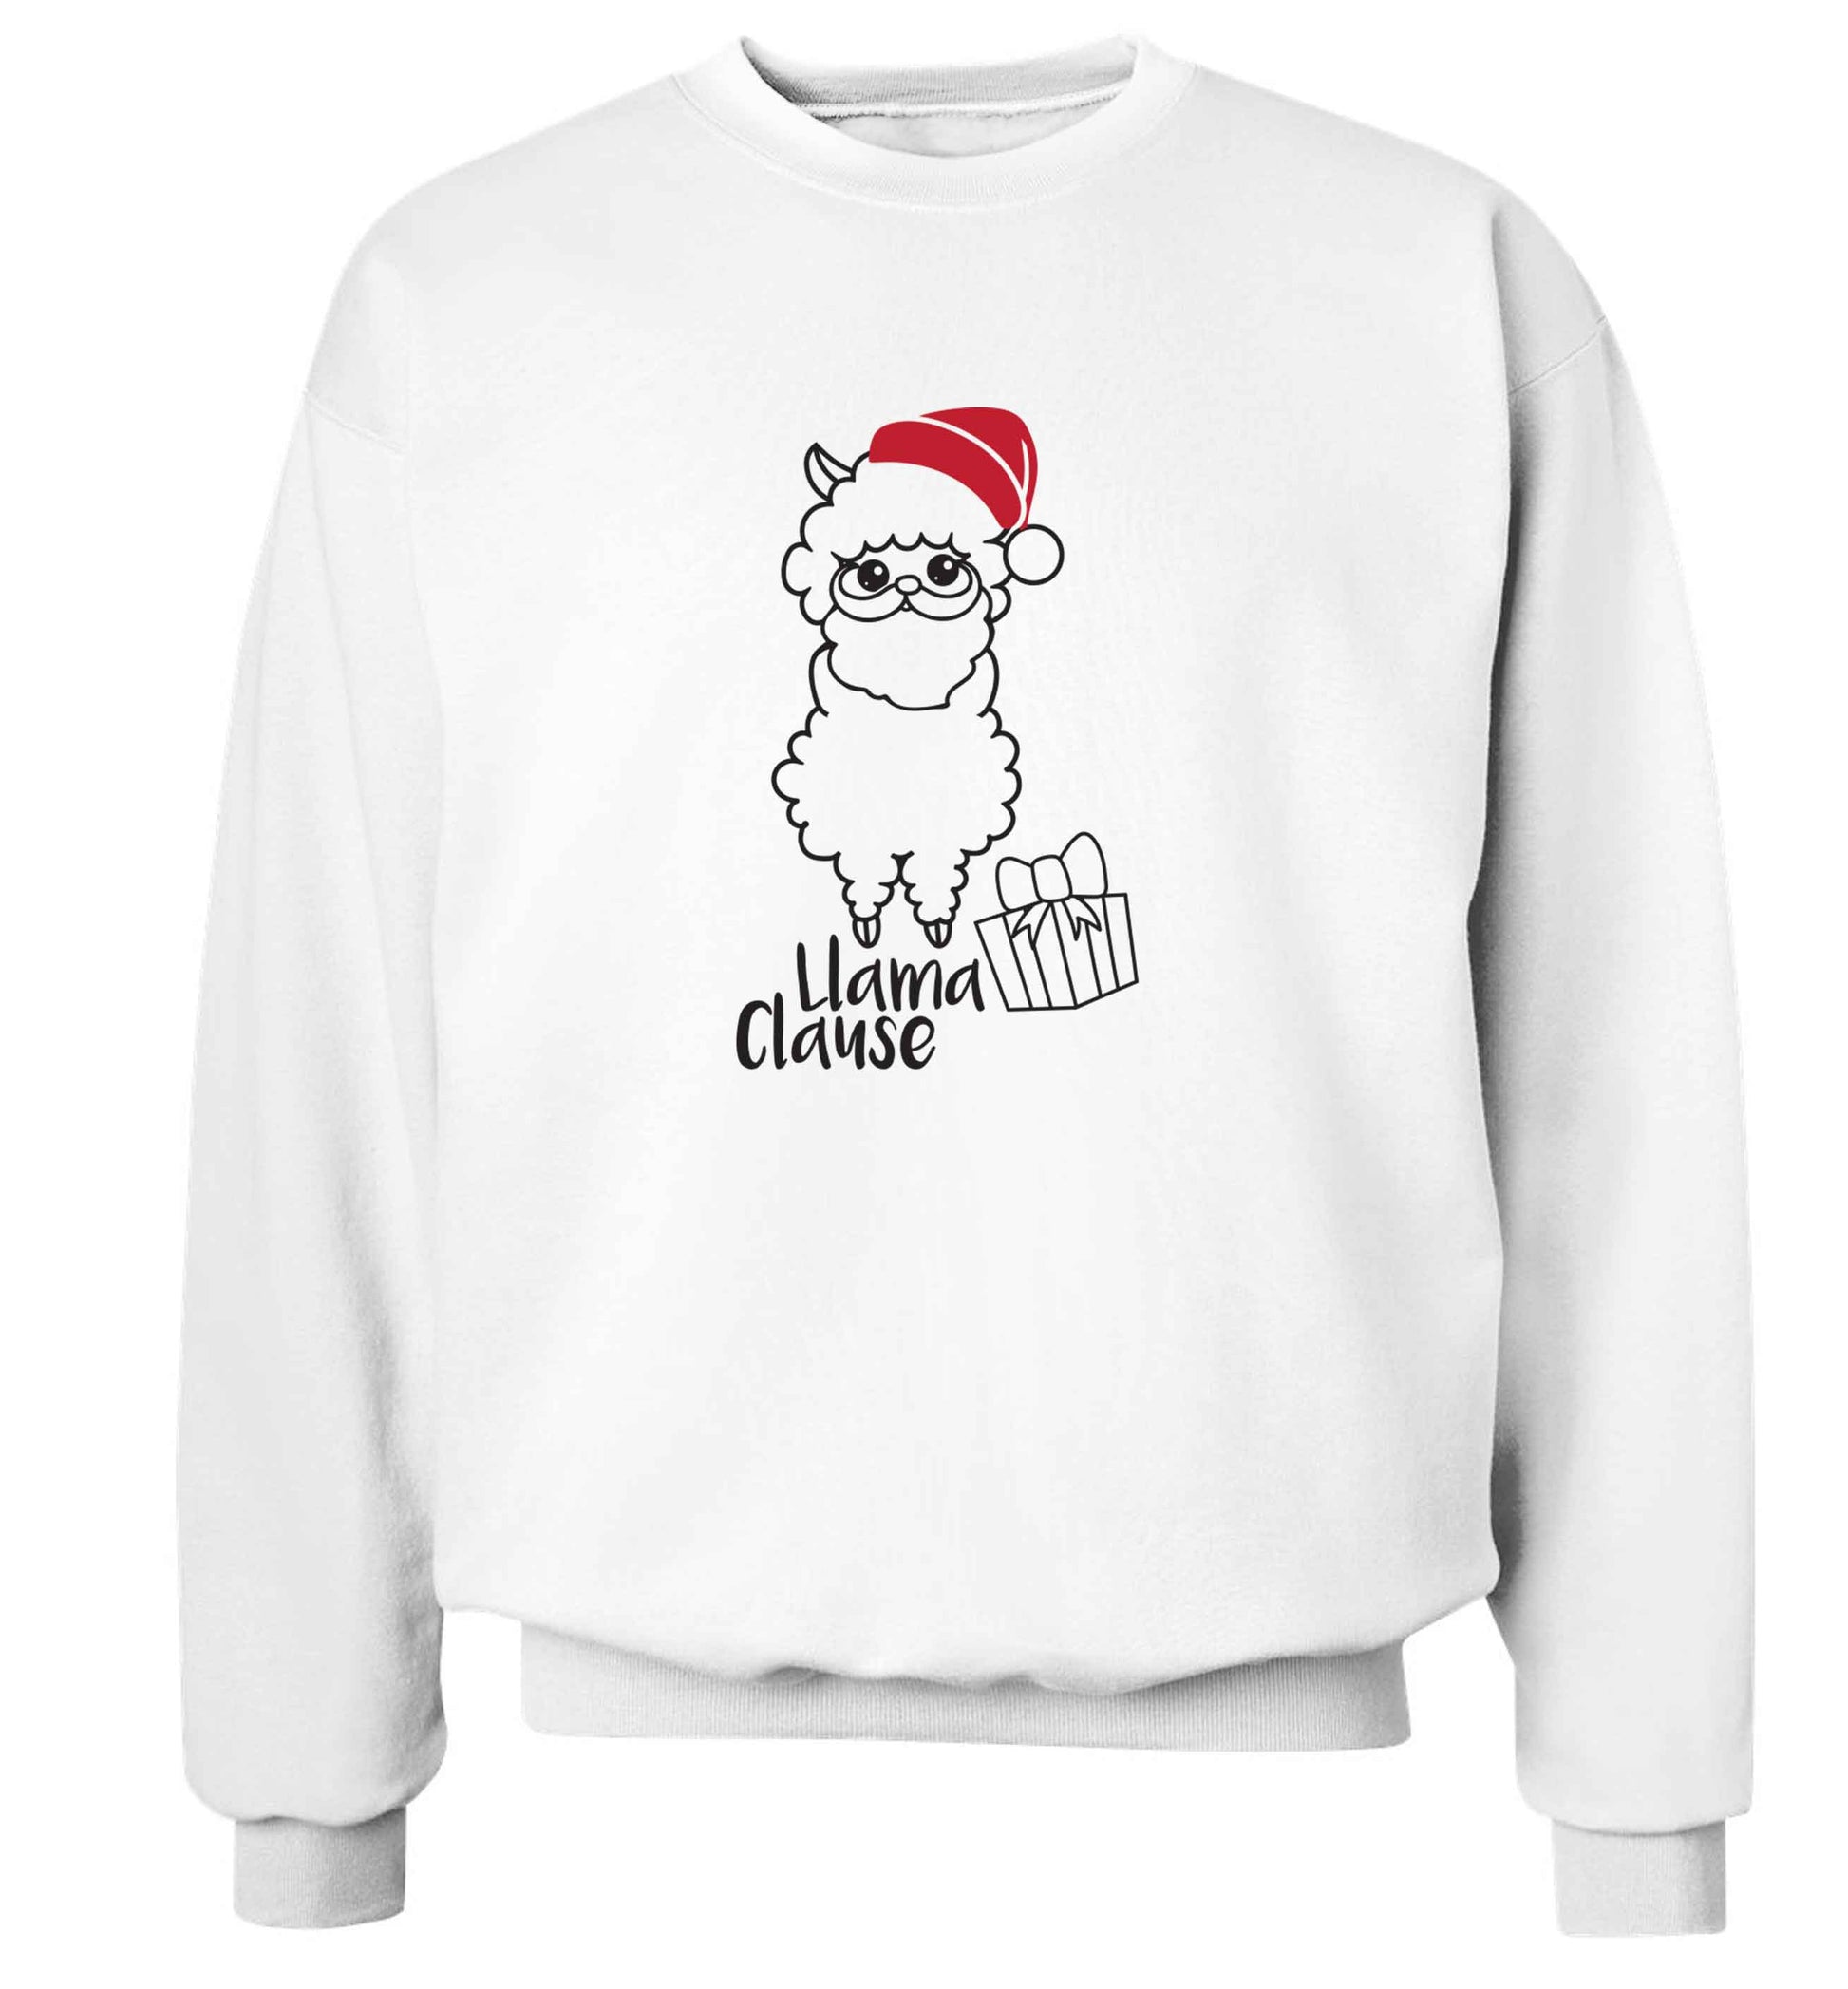 Llama Clause adult's unisex white sweater 2XL